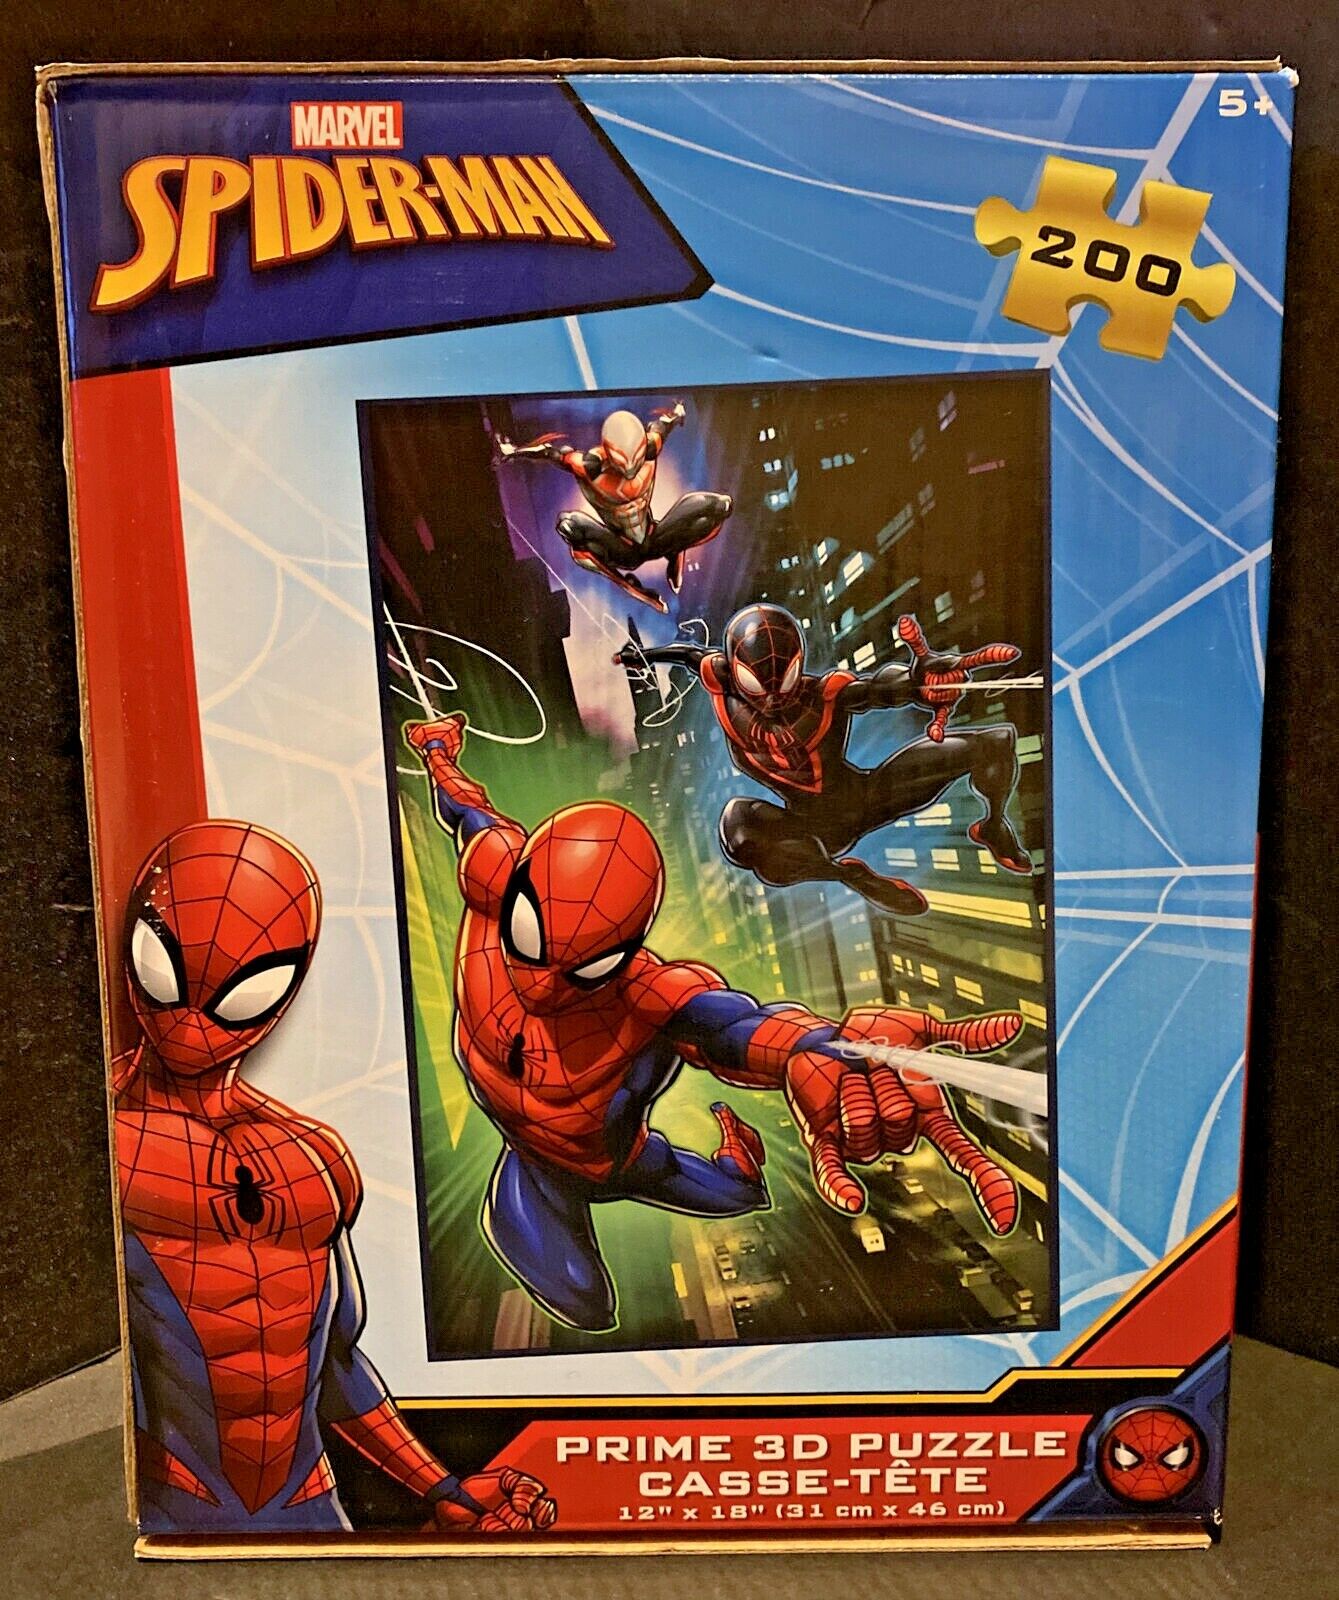 Marvel Spider-Man 300 Piece 3D Puzzle for sale online